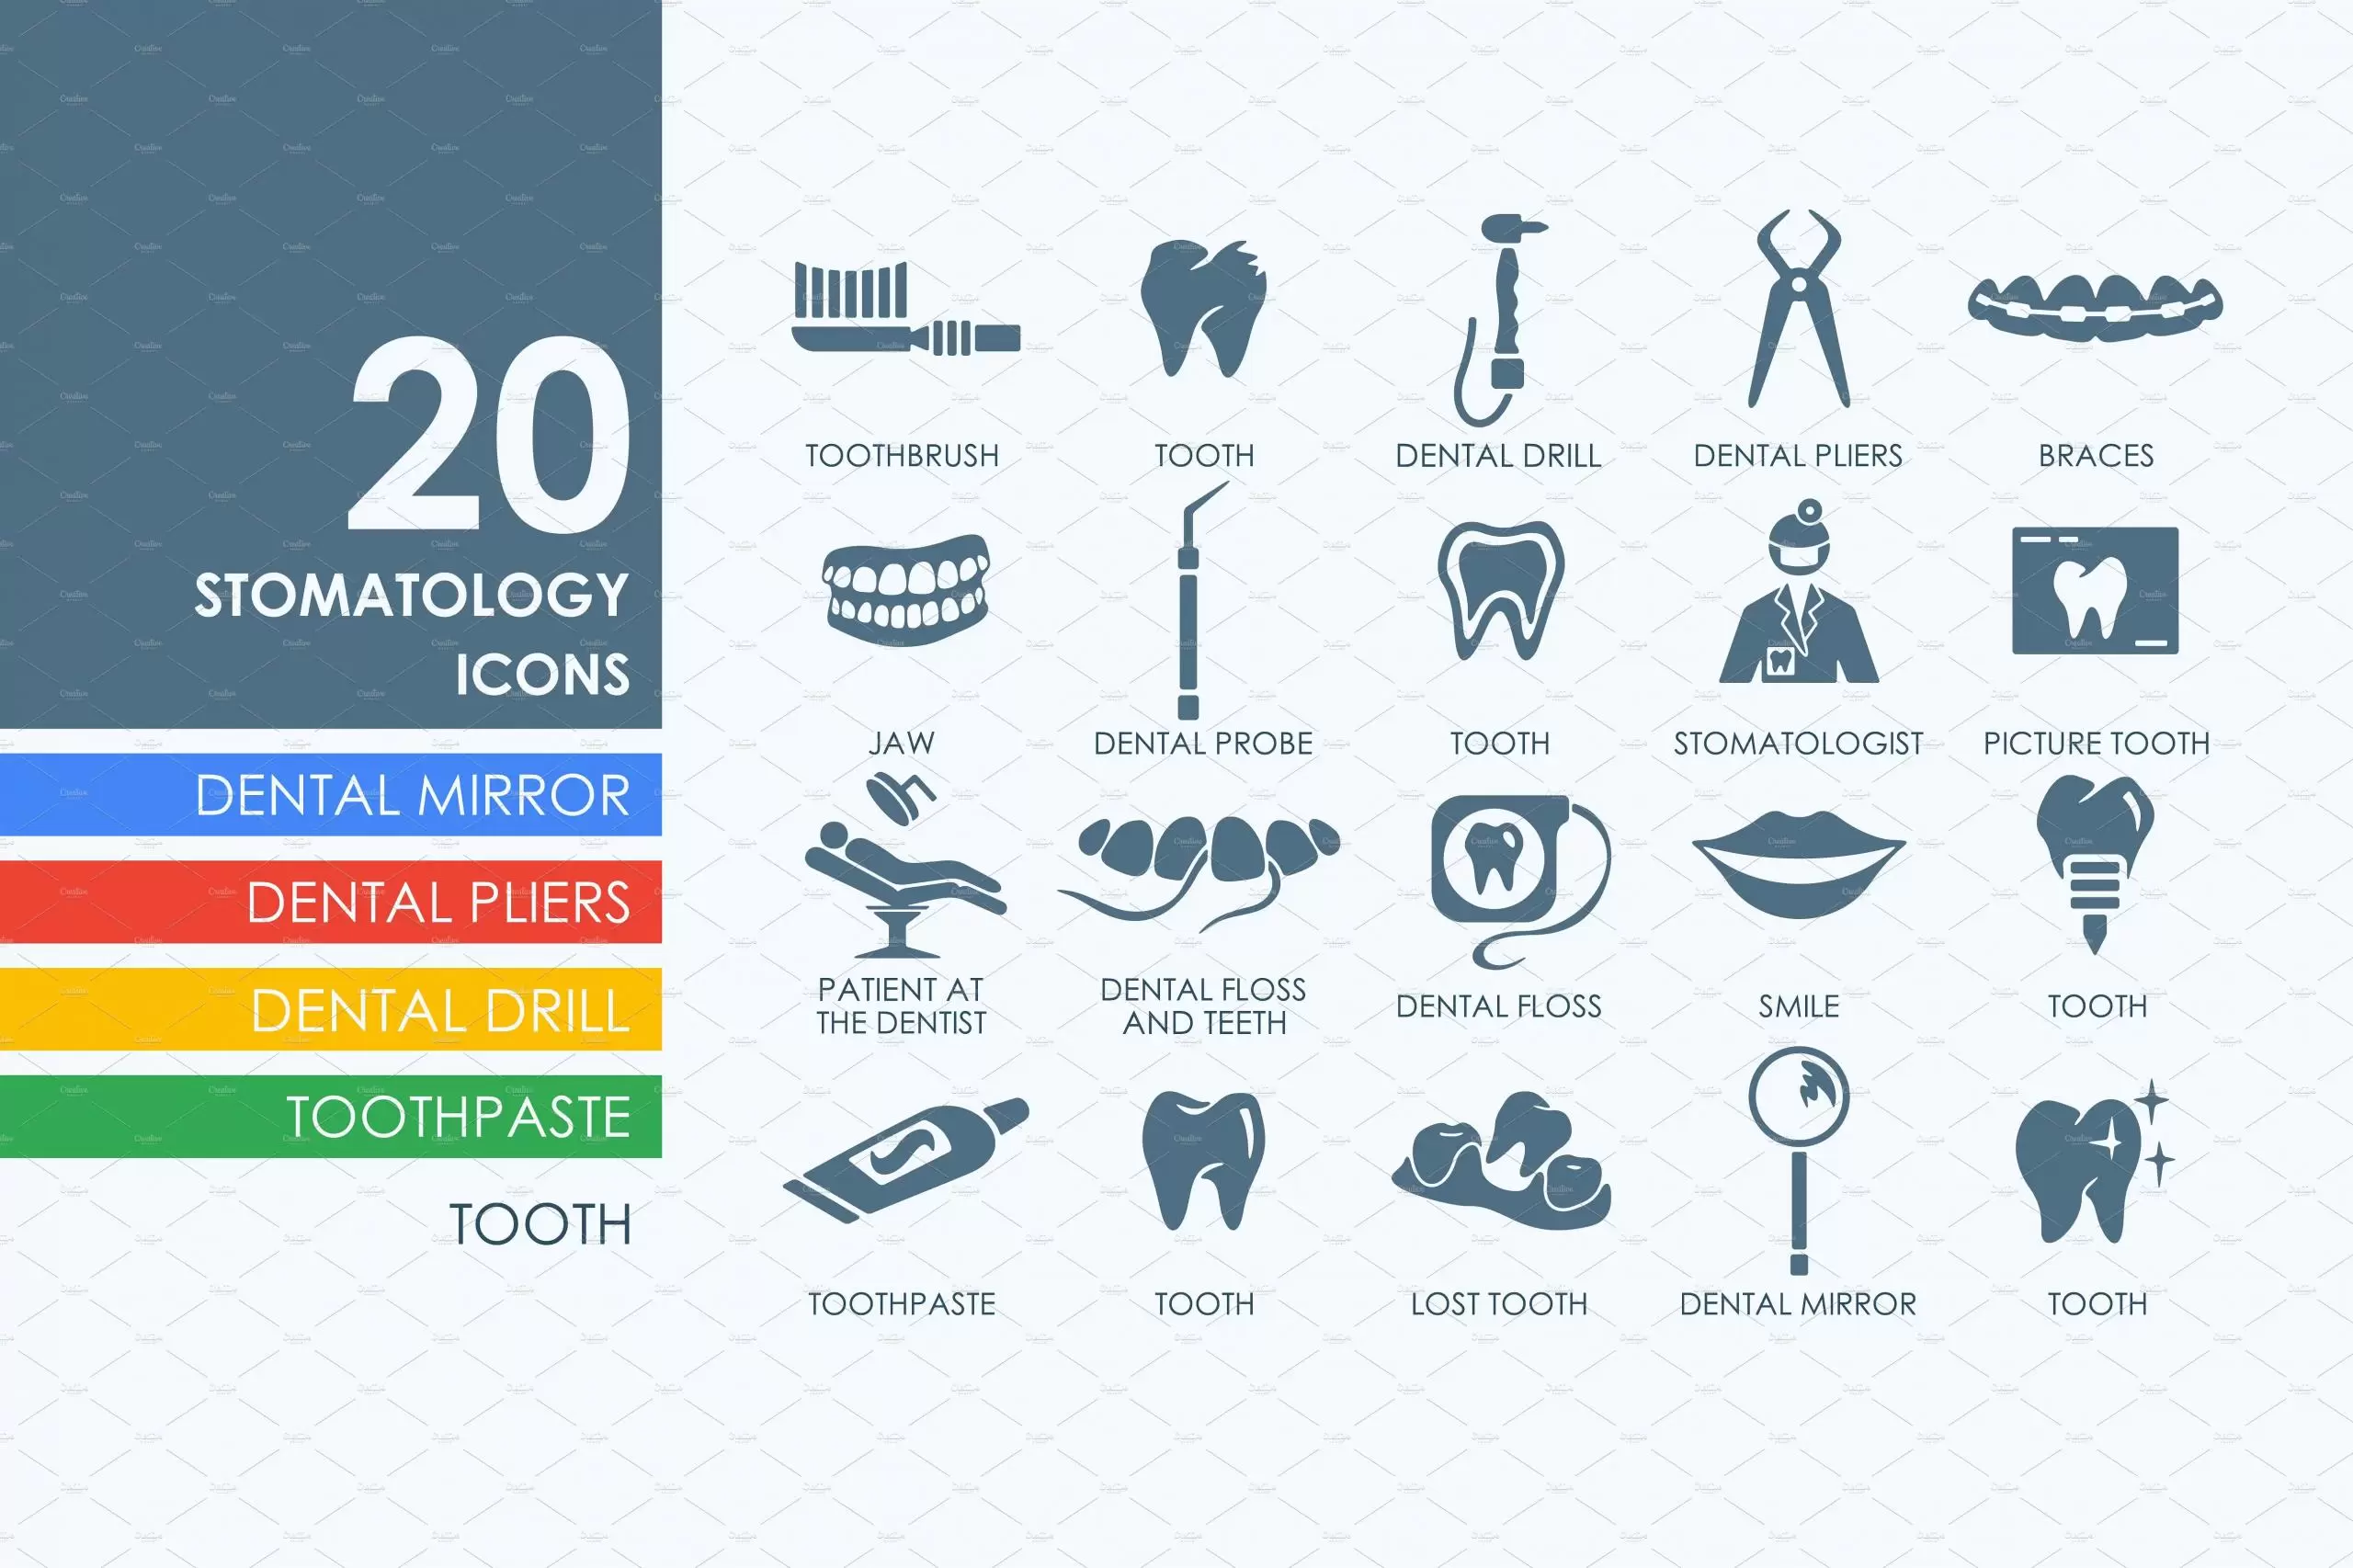 牙科图标素材 20 Stomatology icons插图